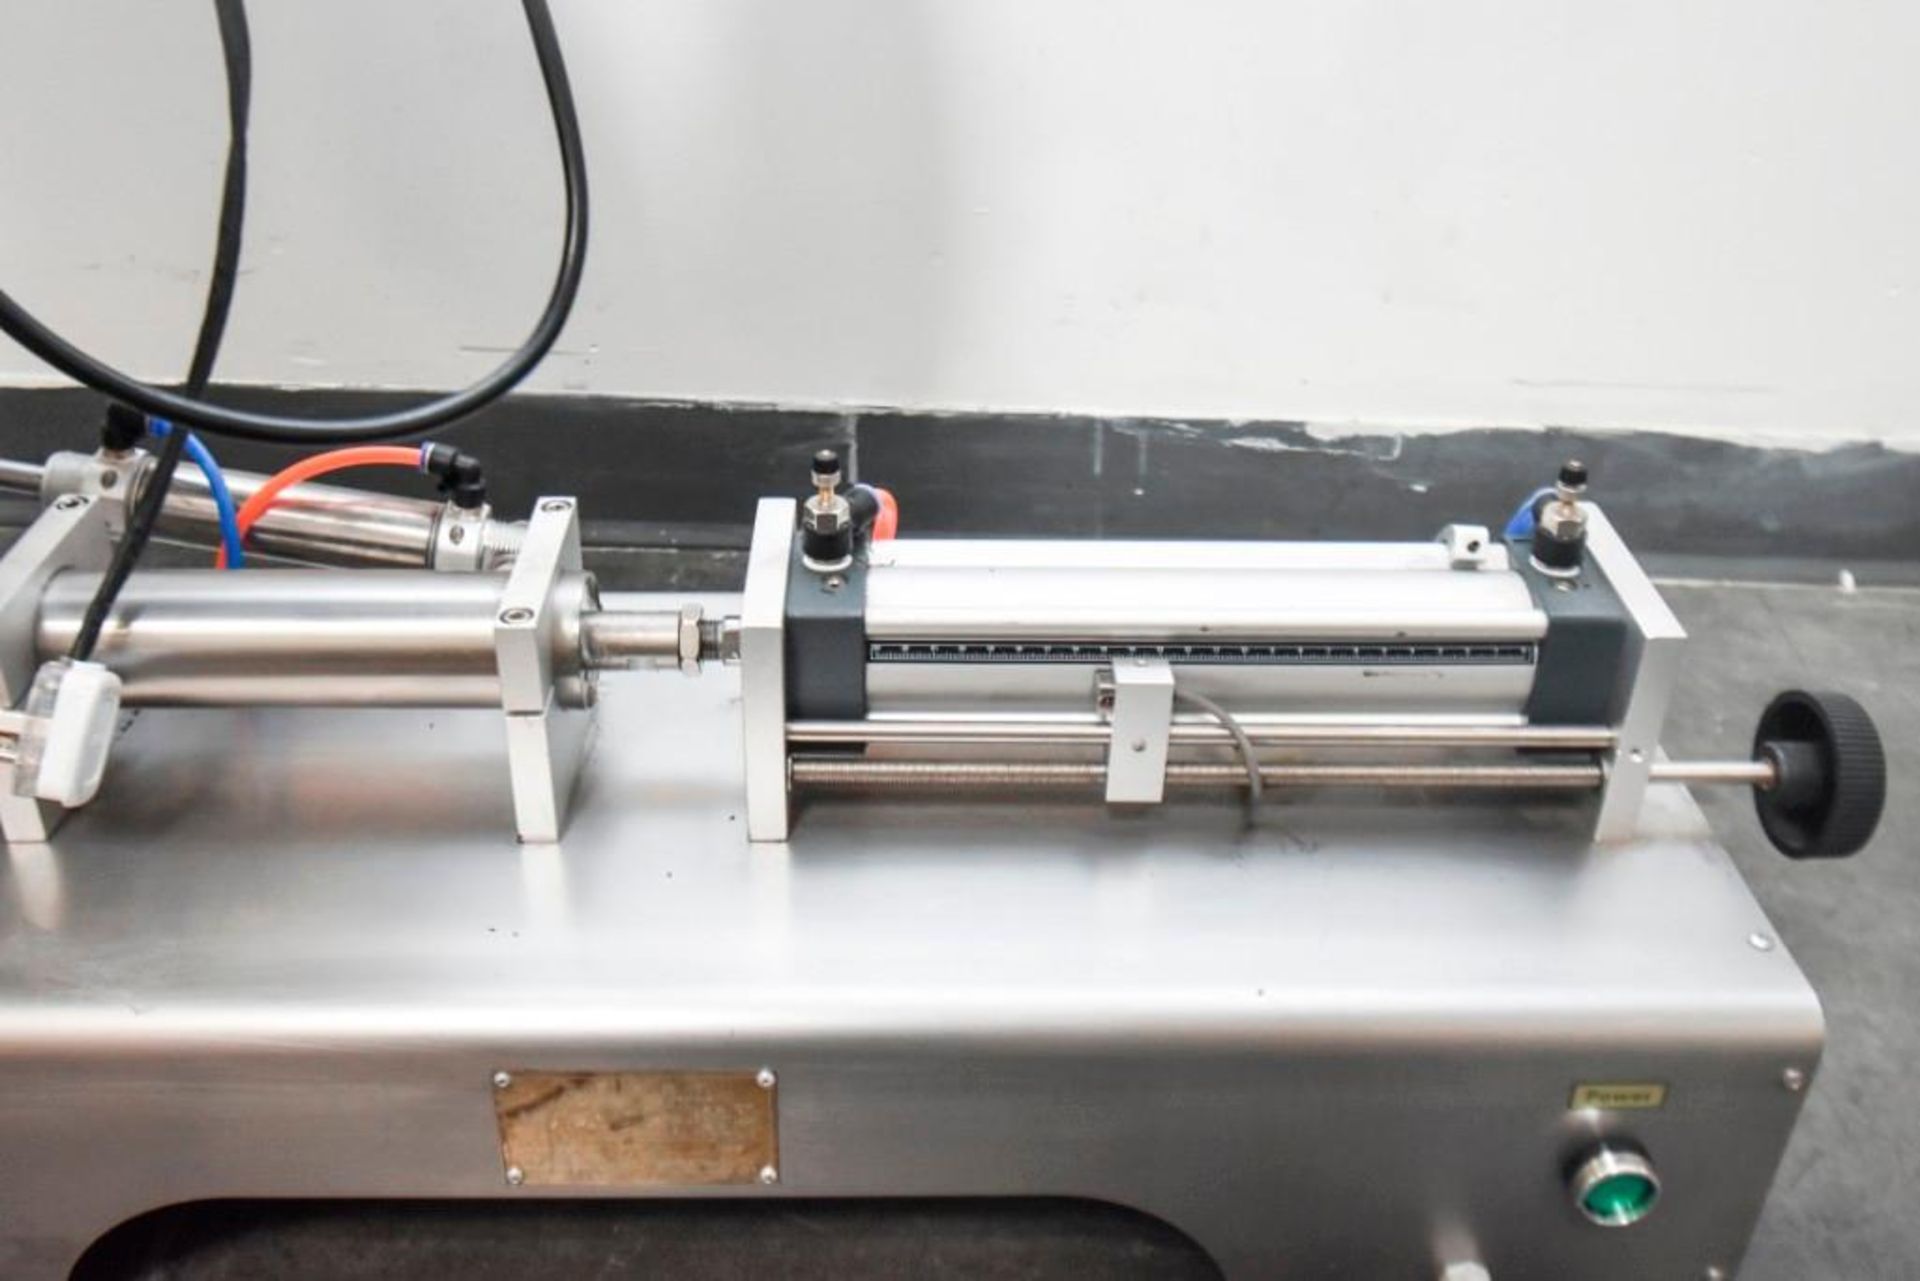 Quantitative Semi-Automatic Paste Liquid Filling Machine G1WG with Heated Hopper & Mixing Motor - Image 7 of 15